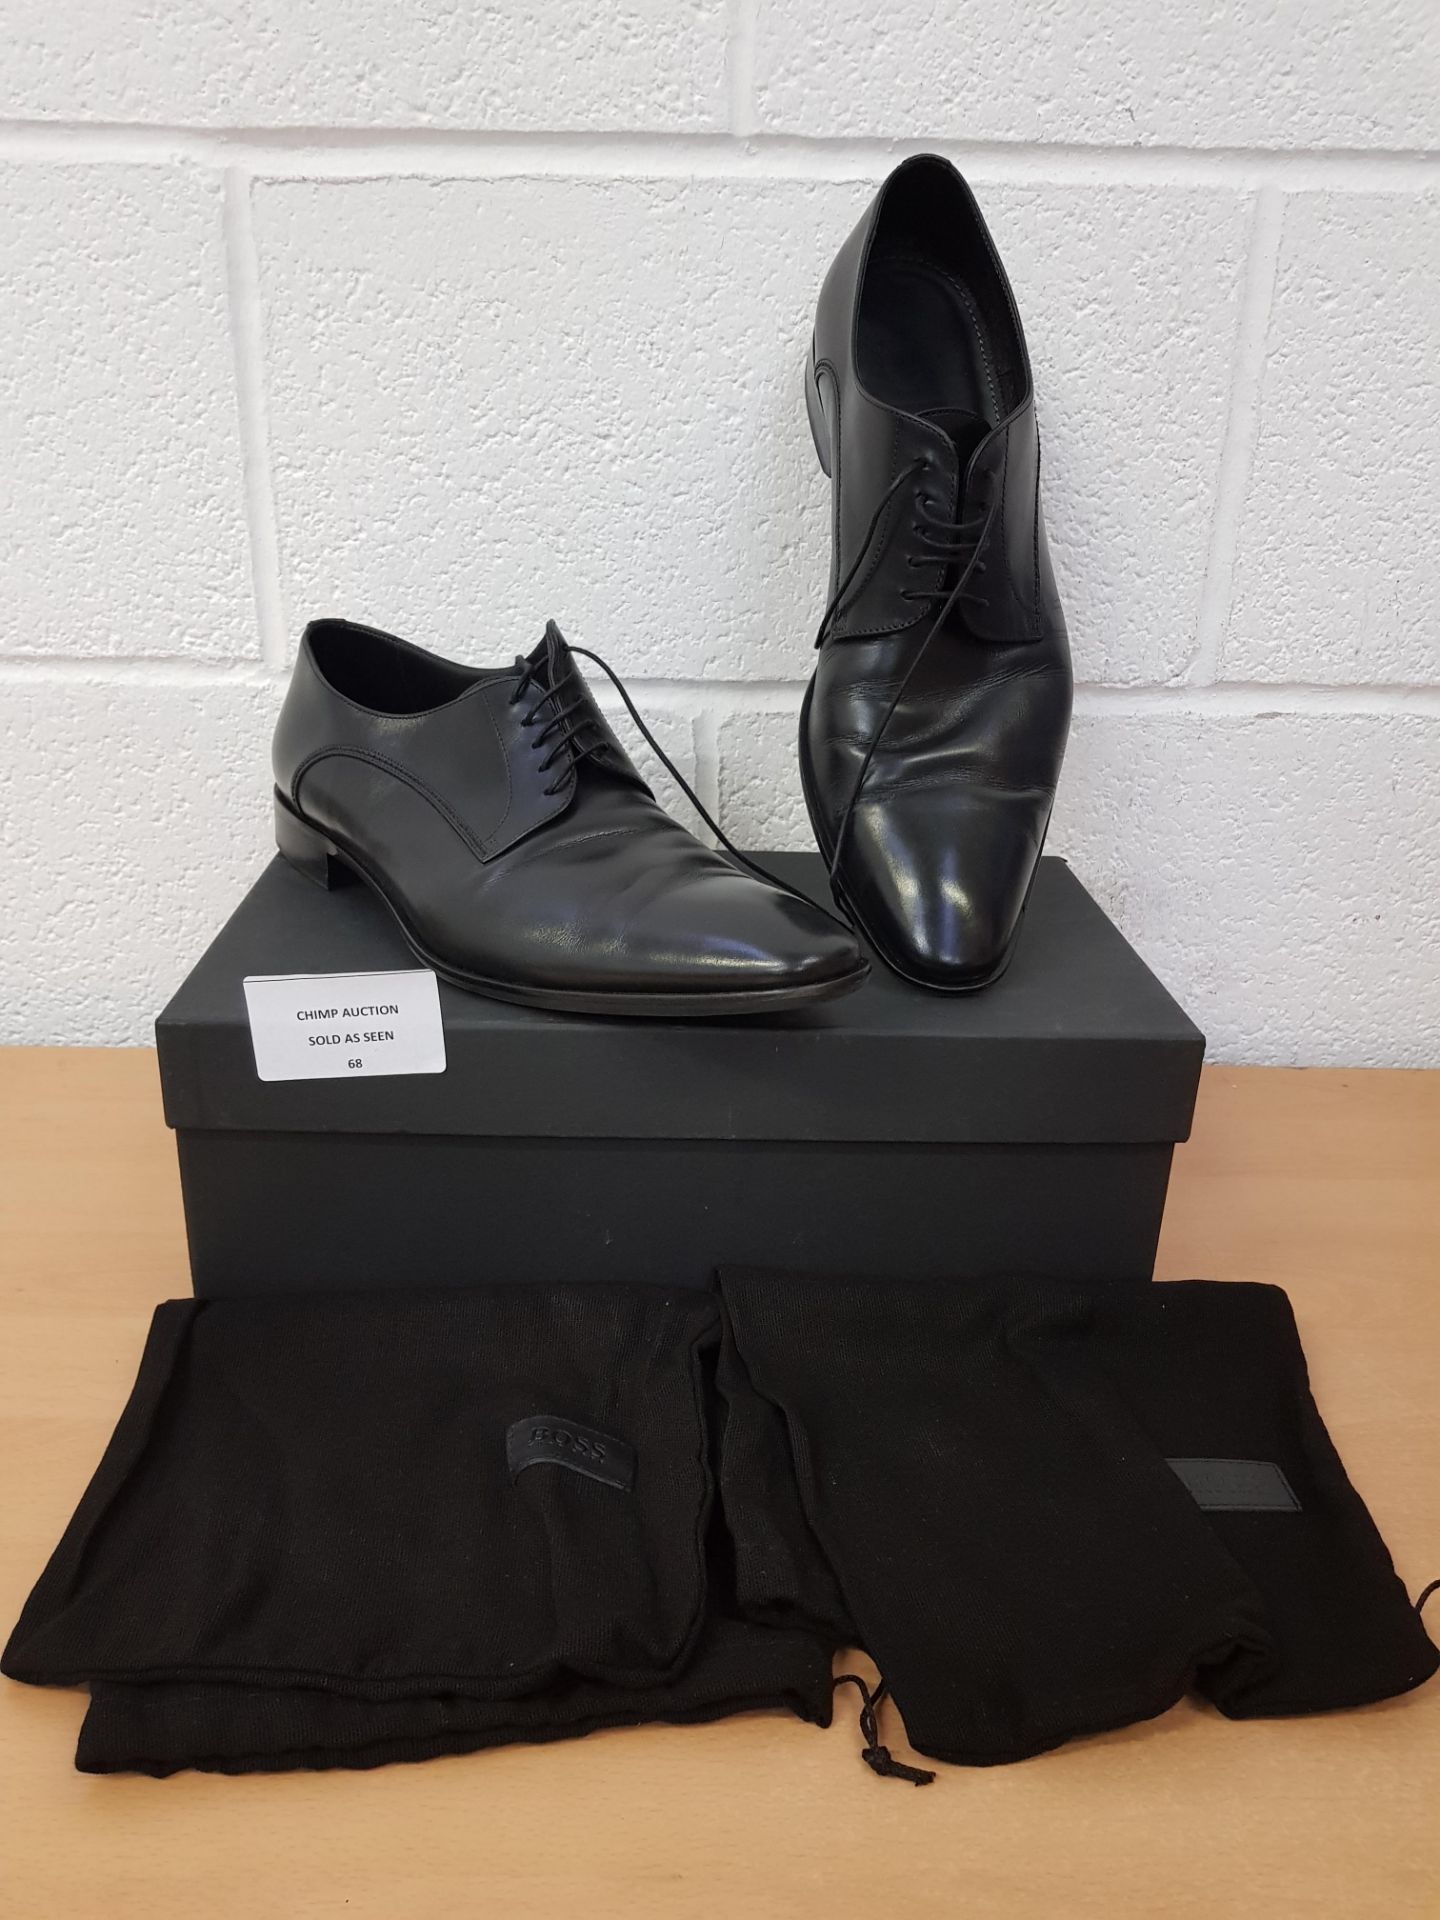 Hugo Boss leather men's shoes UK 10.5 RRP £139.99